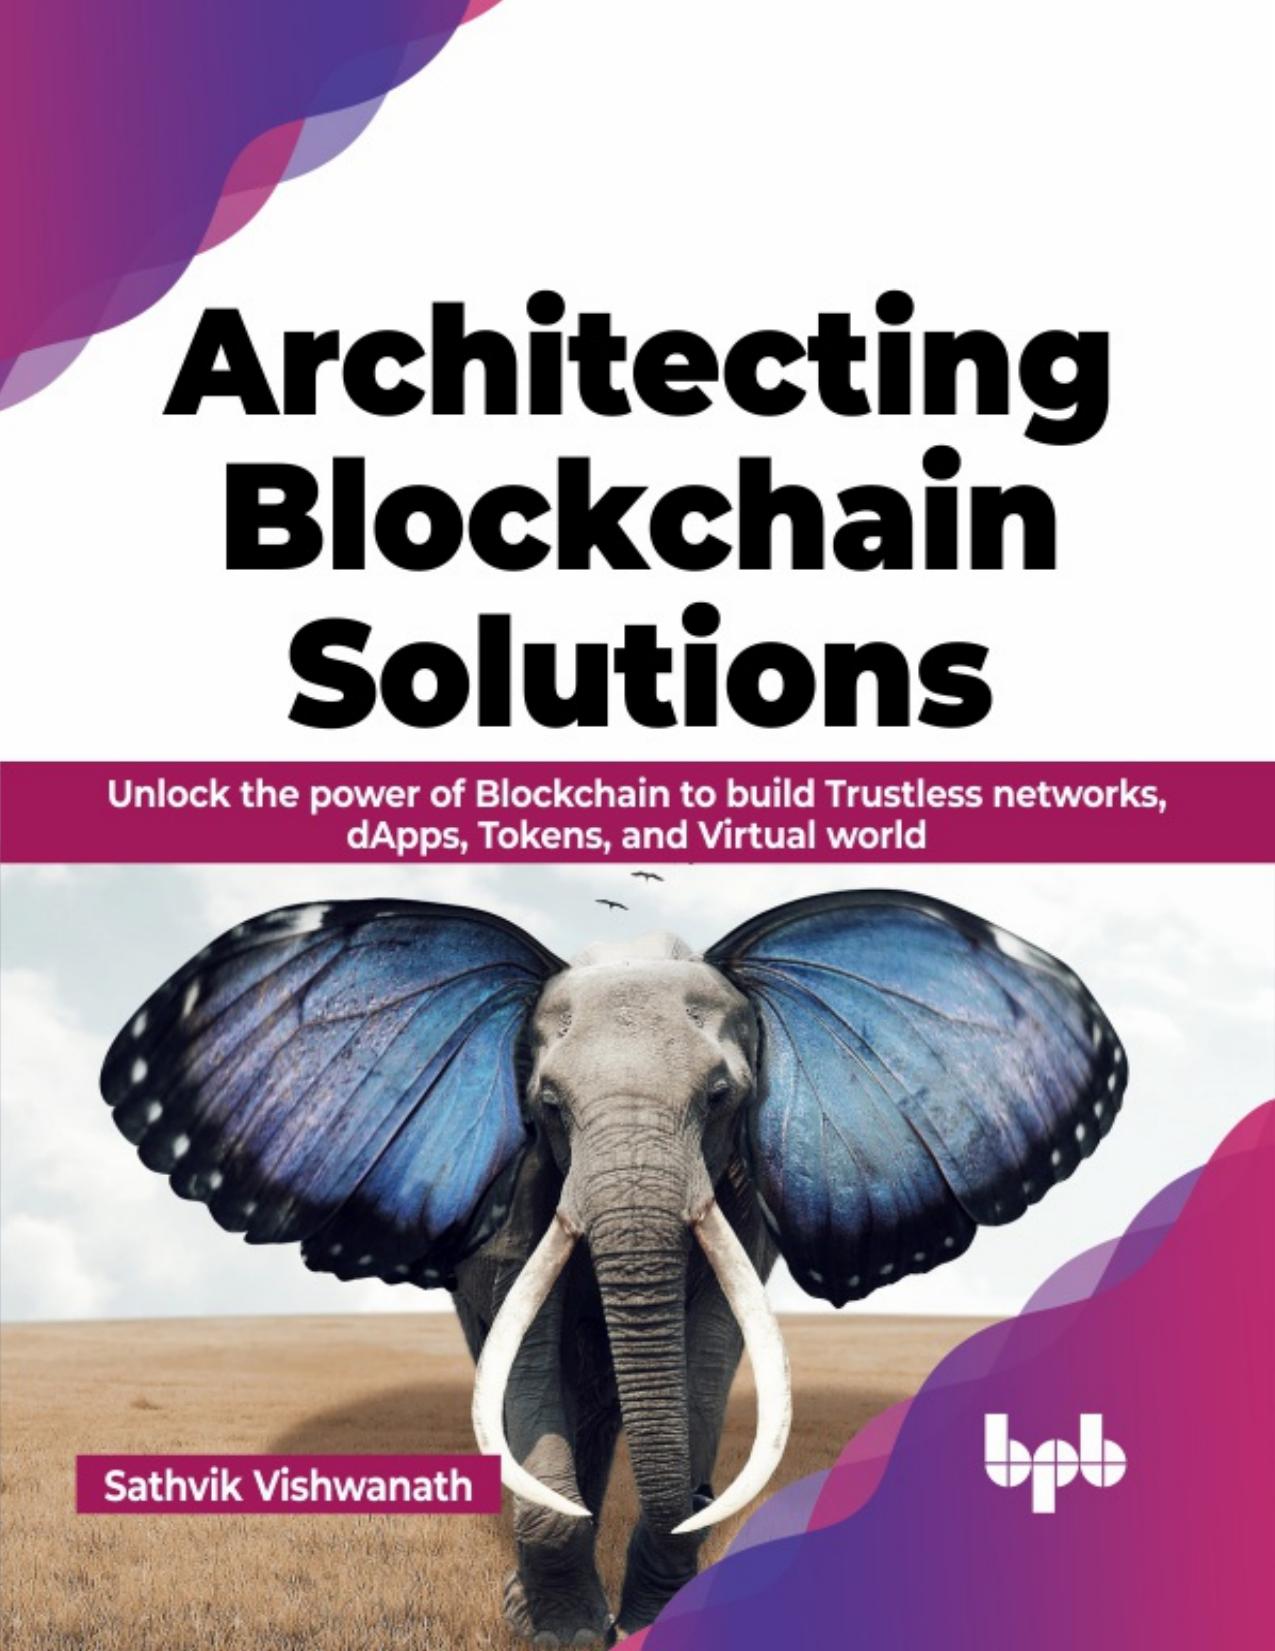 Architecting Blockchain Solutions: Unlock the Power of Blockchain to Build Trustless Networks, dApps, Tokens, and Virtual World by Sathvik Vishwanath